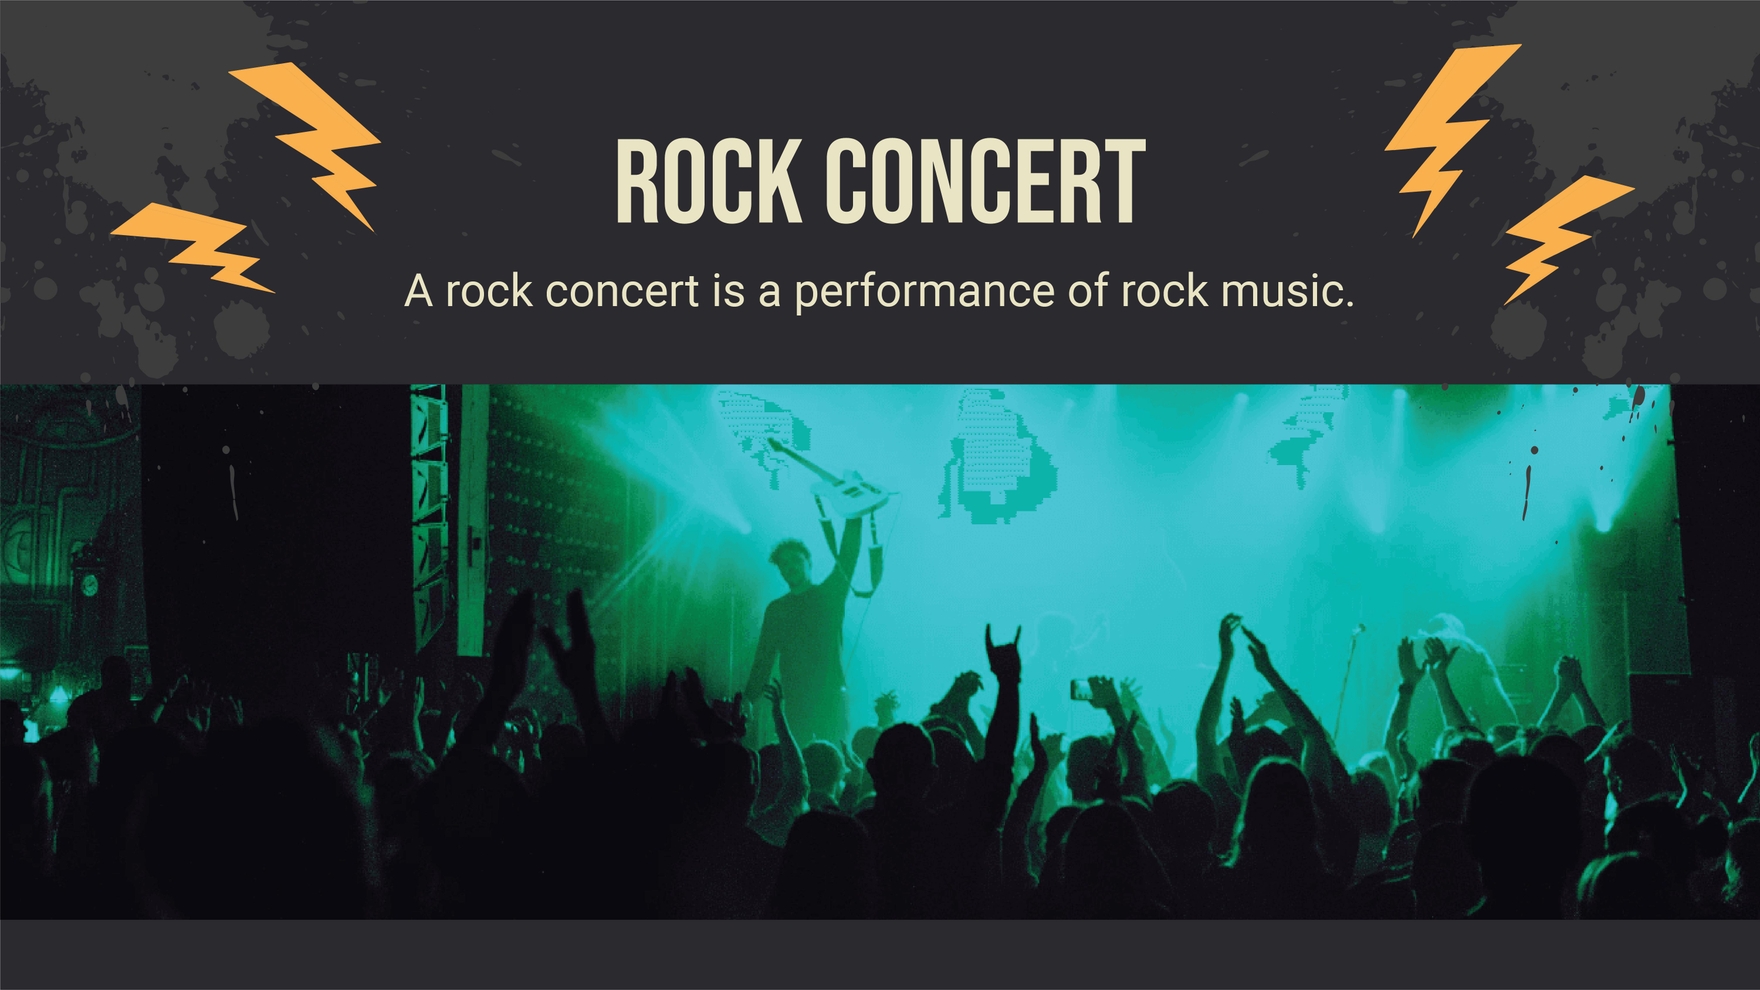 Rock Concert Mk Plan Presentation Template